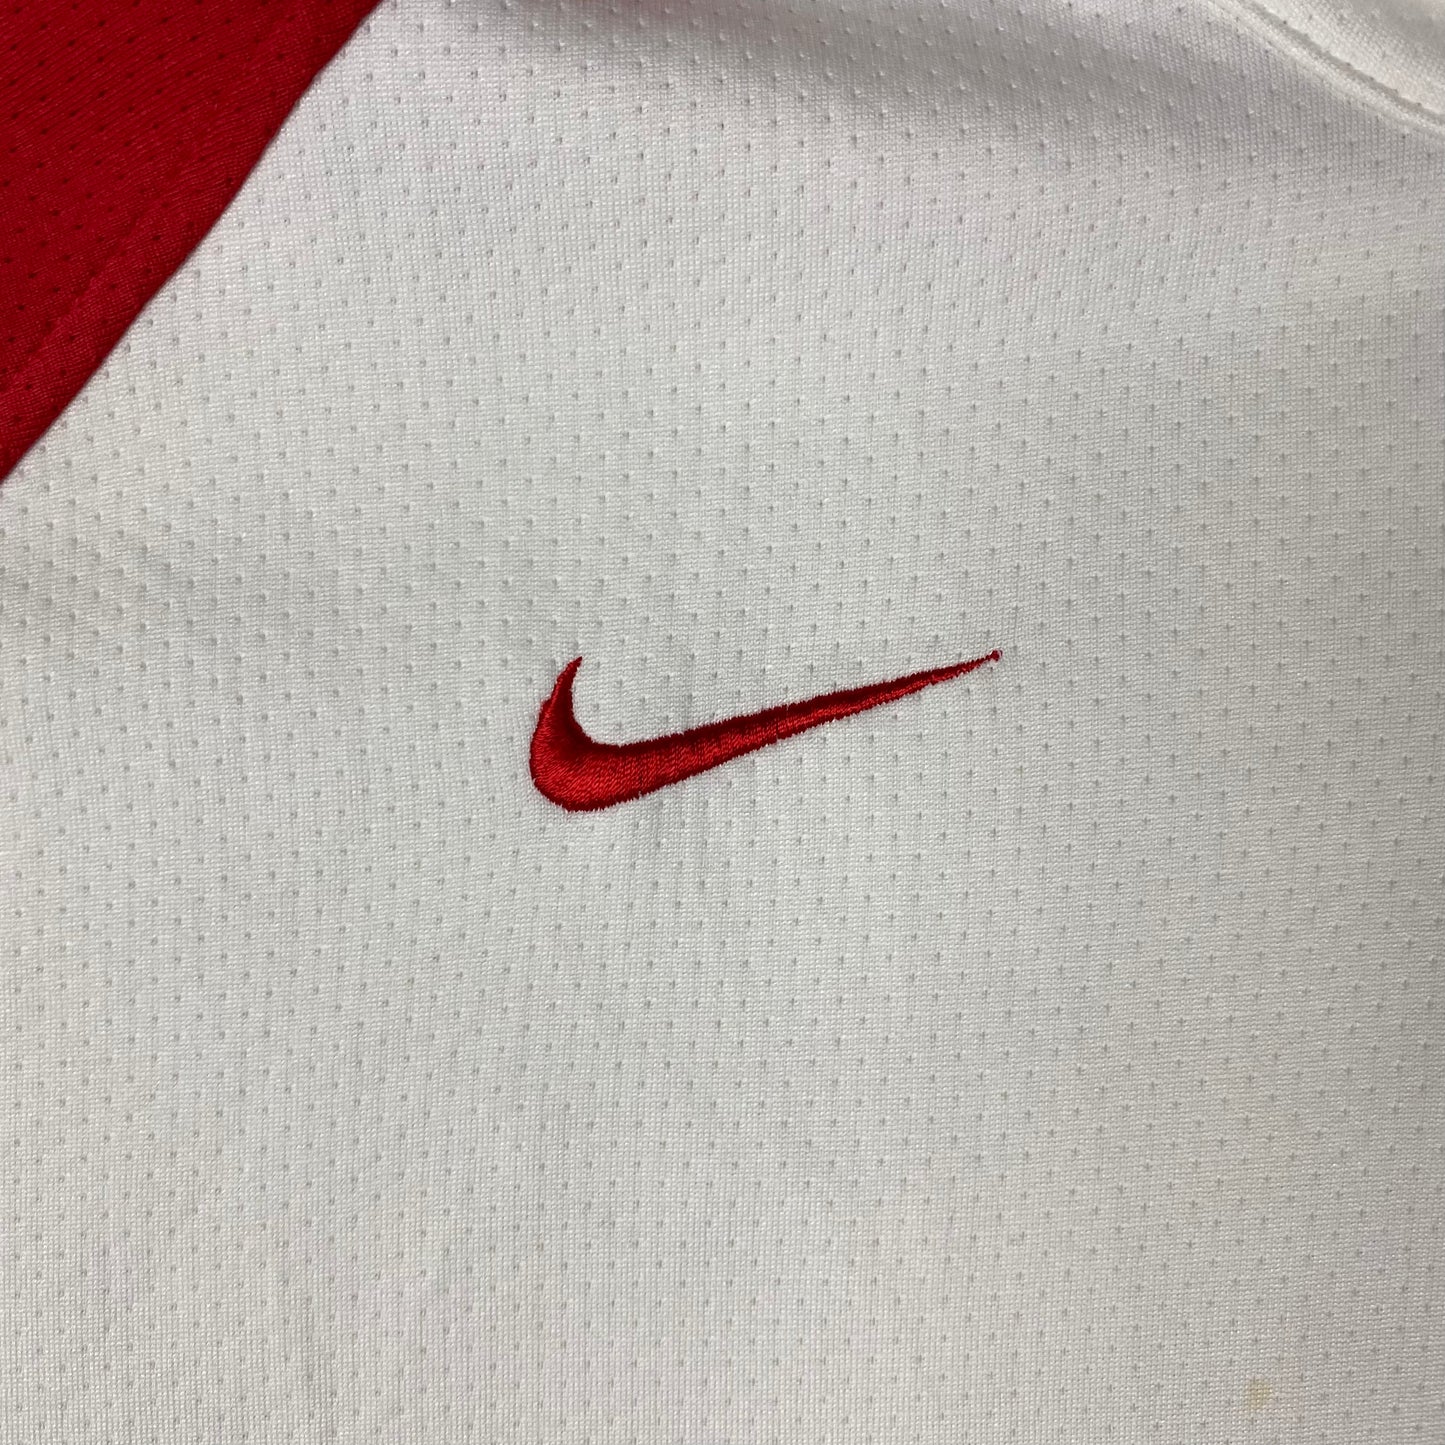 Nike 1/4 zip embroidered swoosh shirt (L)